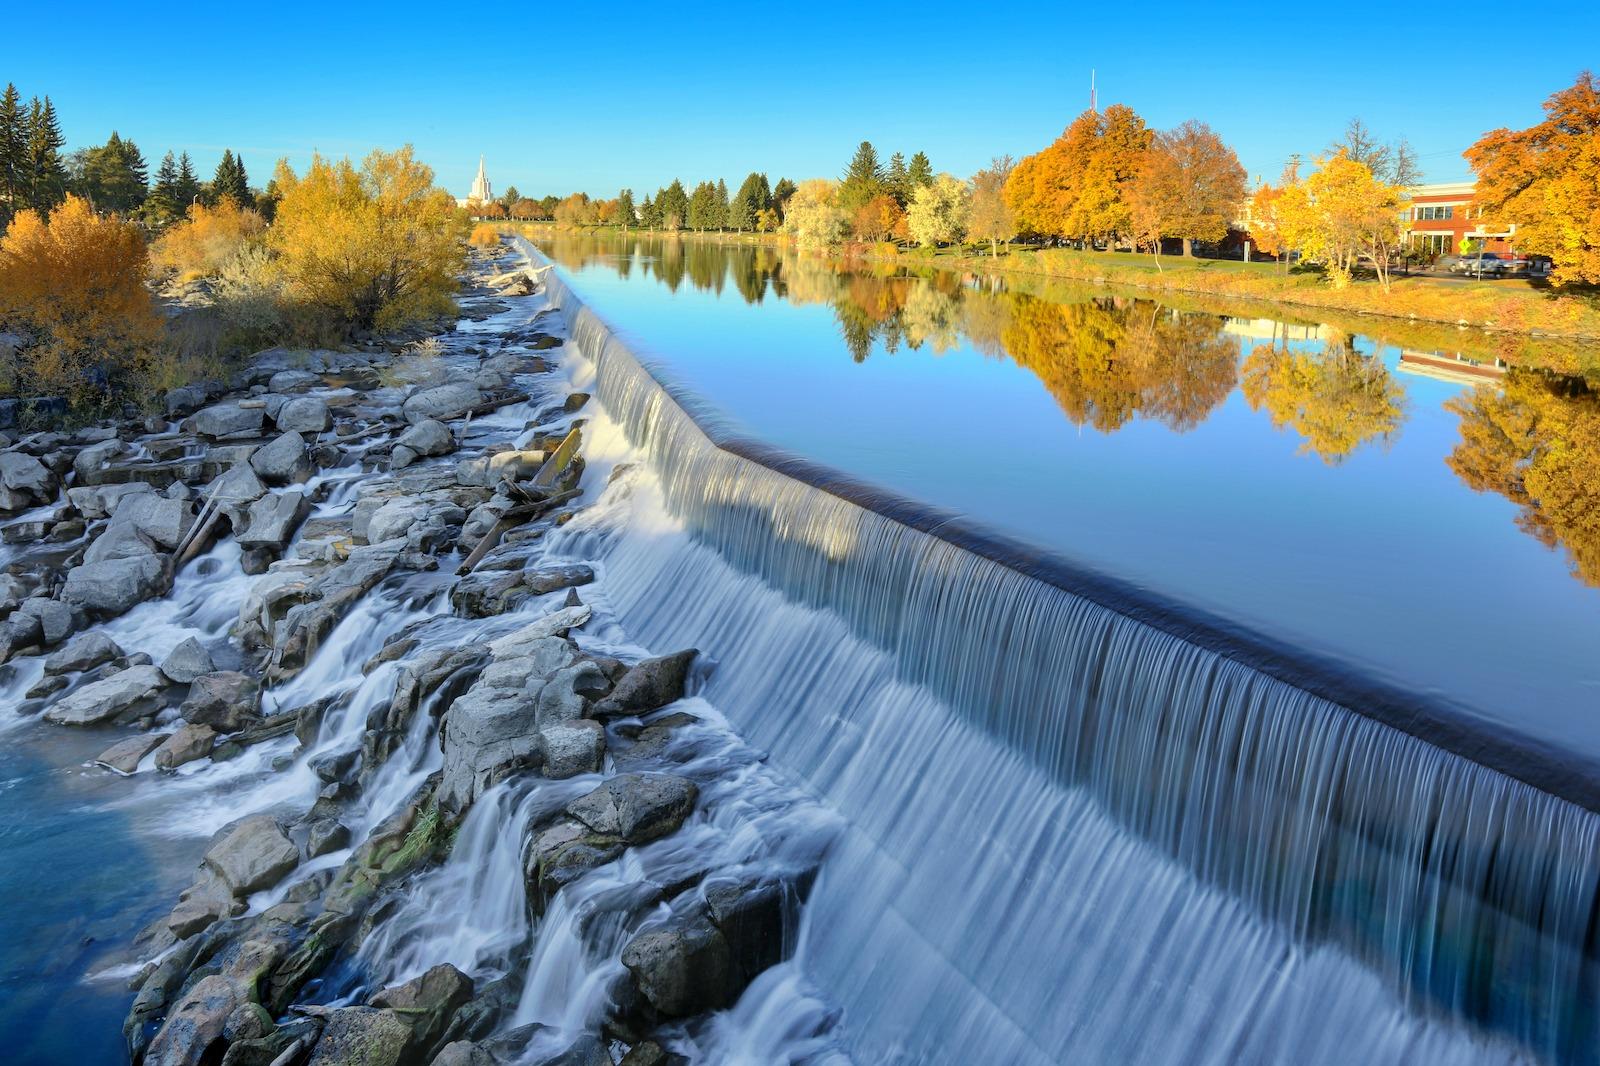 The Snake River waterfall in Idaho Falls, Idaho